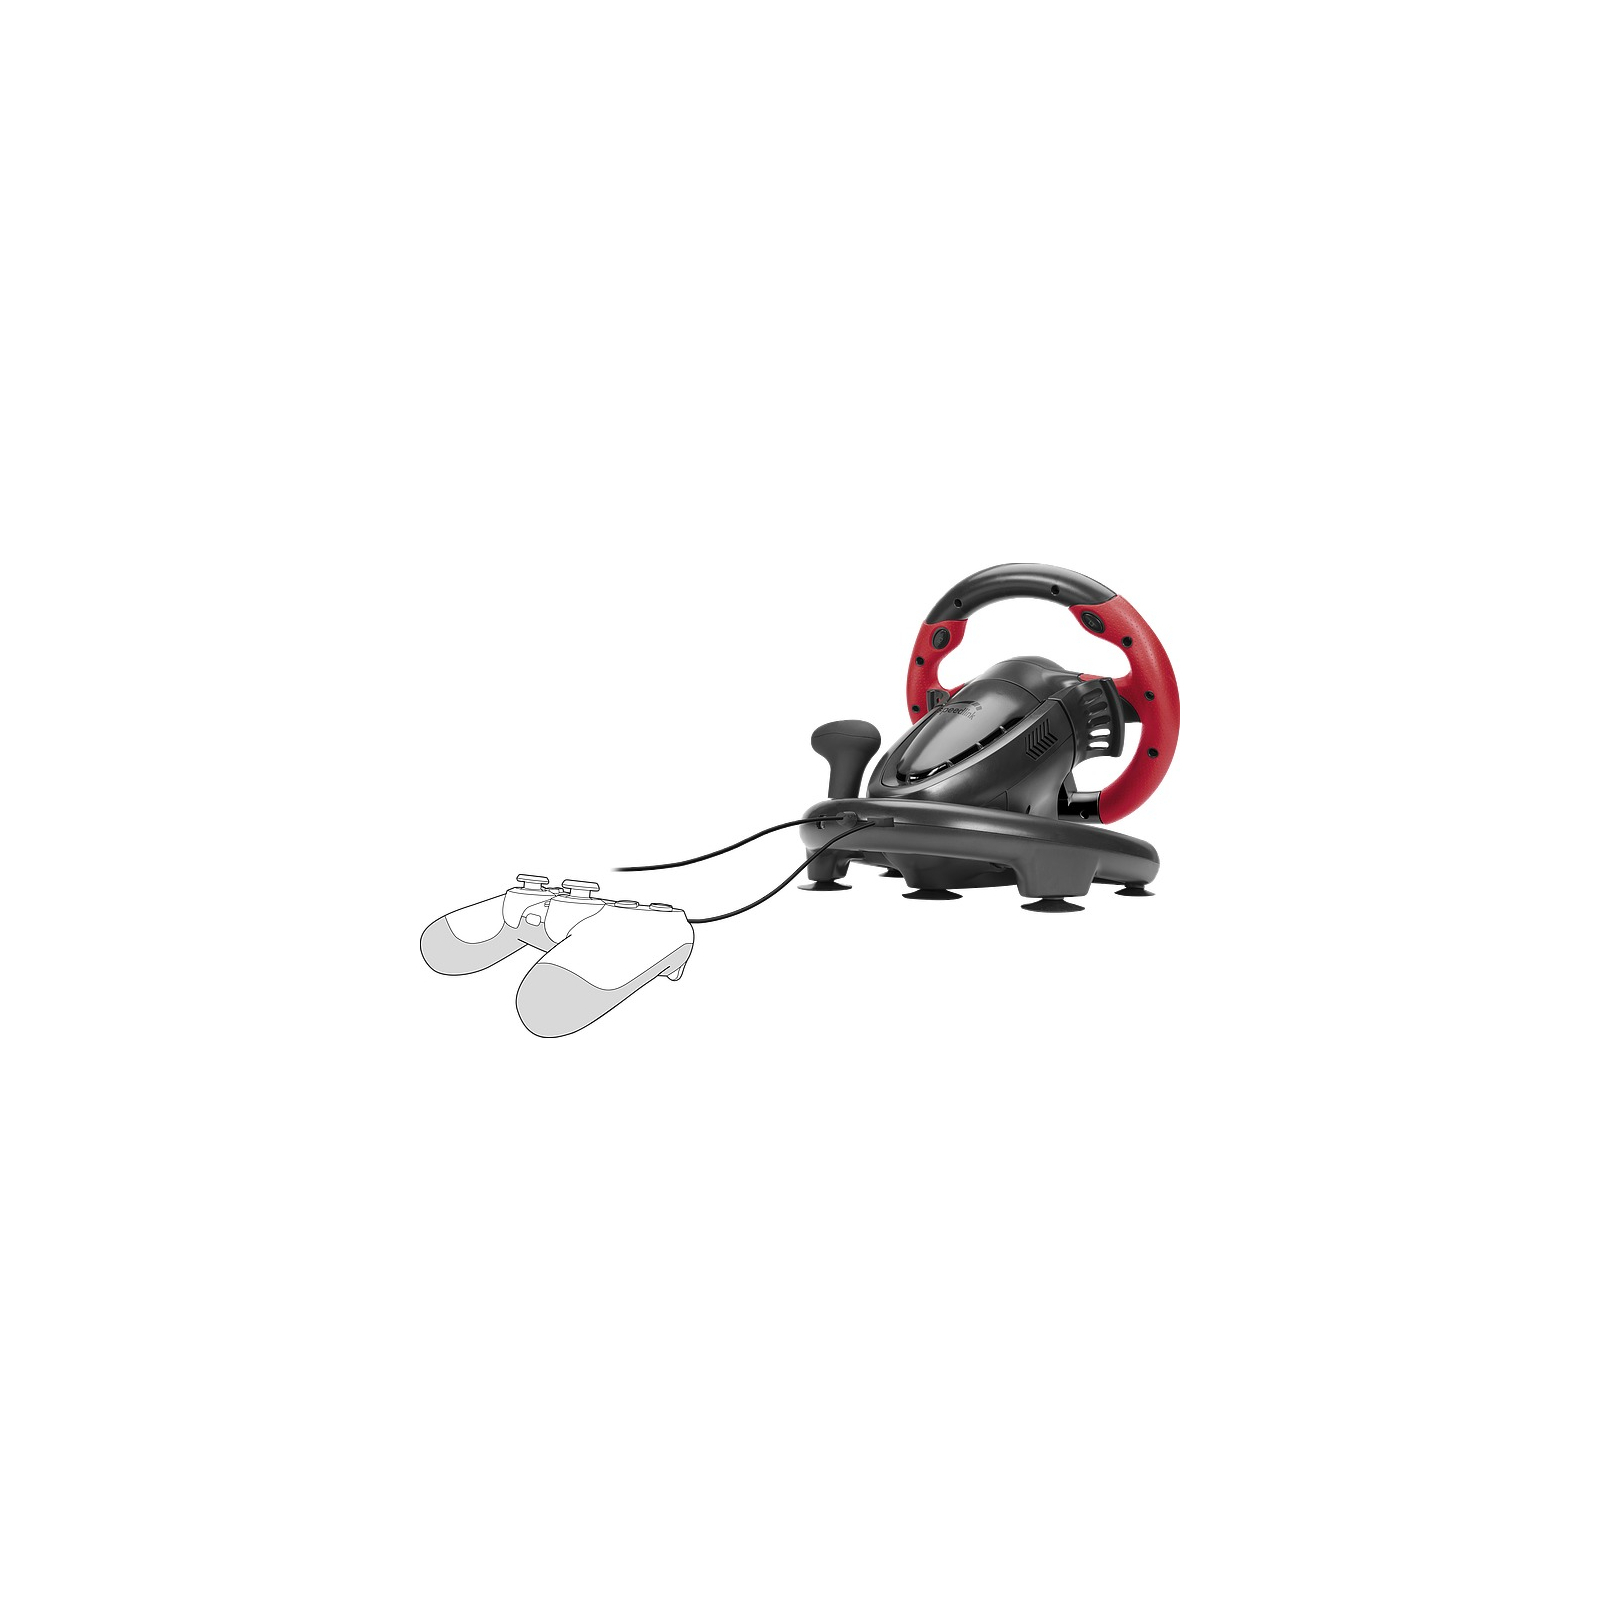 Руль Speedlink Trailblazer Racing Wheel PC/Xbox One/PS3/PS4 Black/Red (SL-450500-BK) изображение 4